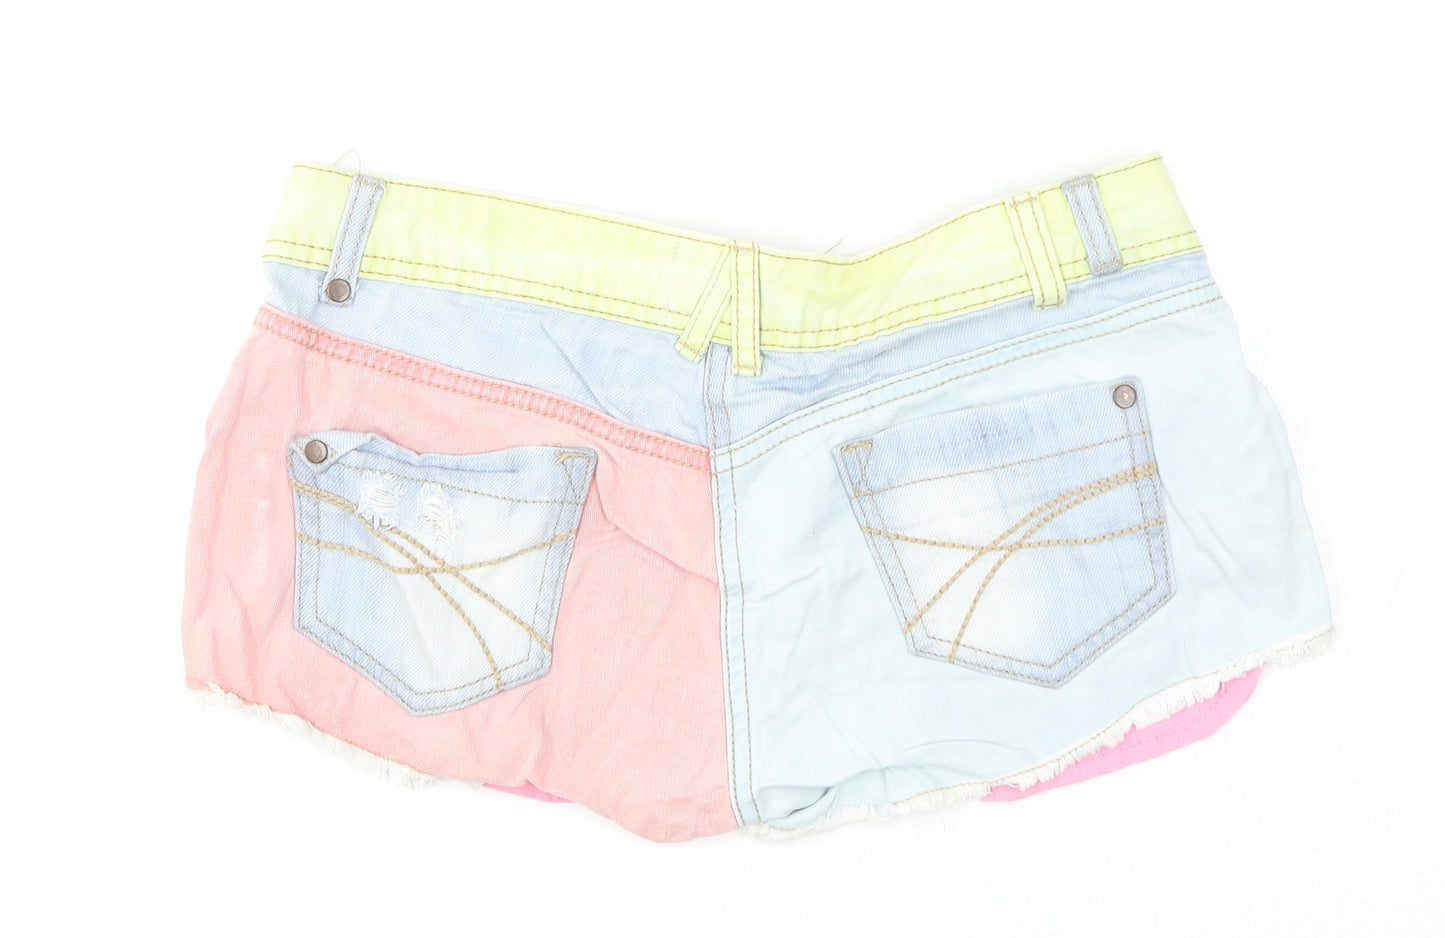 Ribbon Womens Multicoloured Colourblock Cotton Hot Pants Shorts Size 8 Regular Zip - Distressed Look Raw Hems